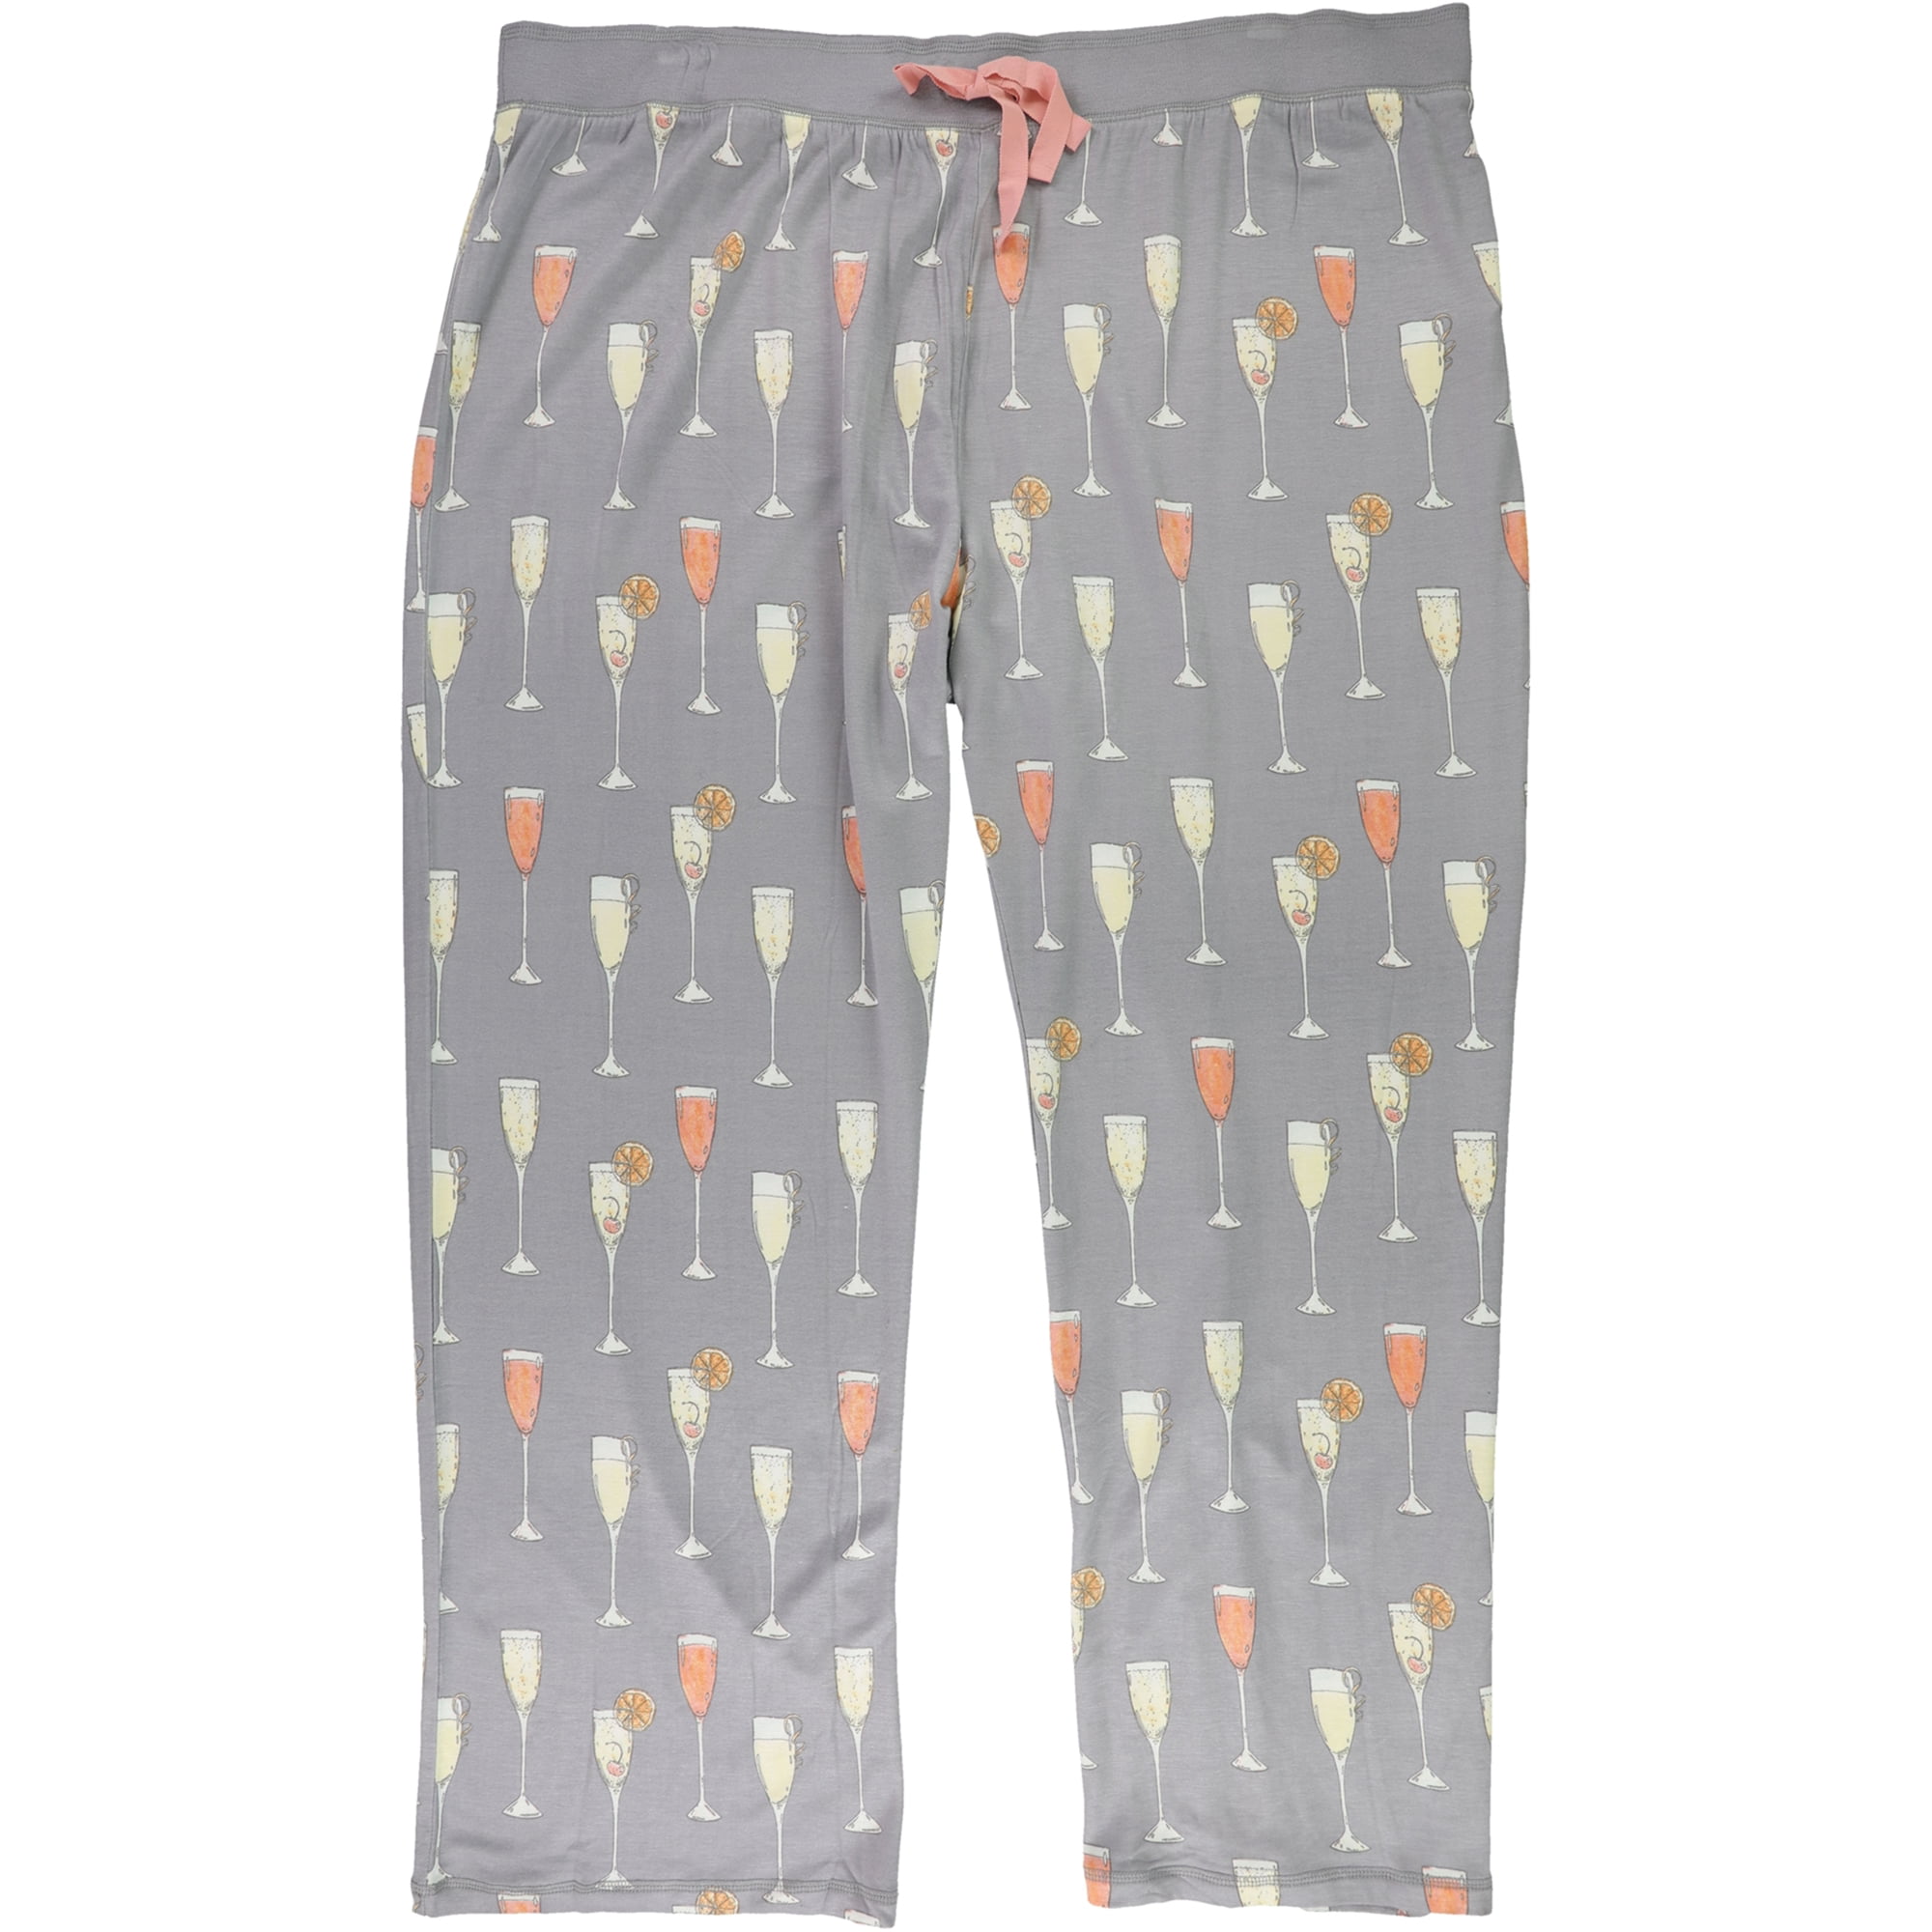 Soft Surroundings Spandex Pajama Pants for Women